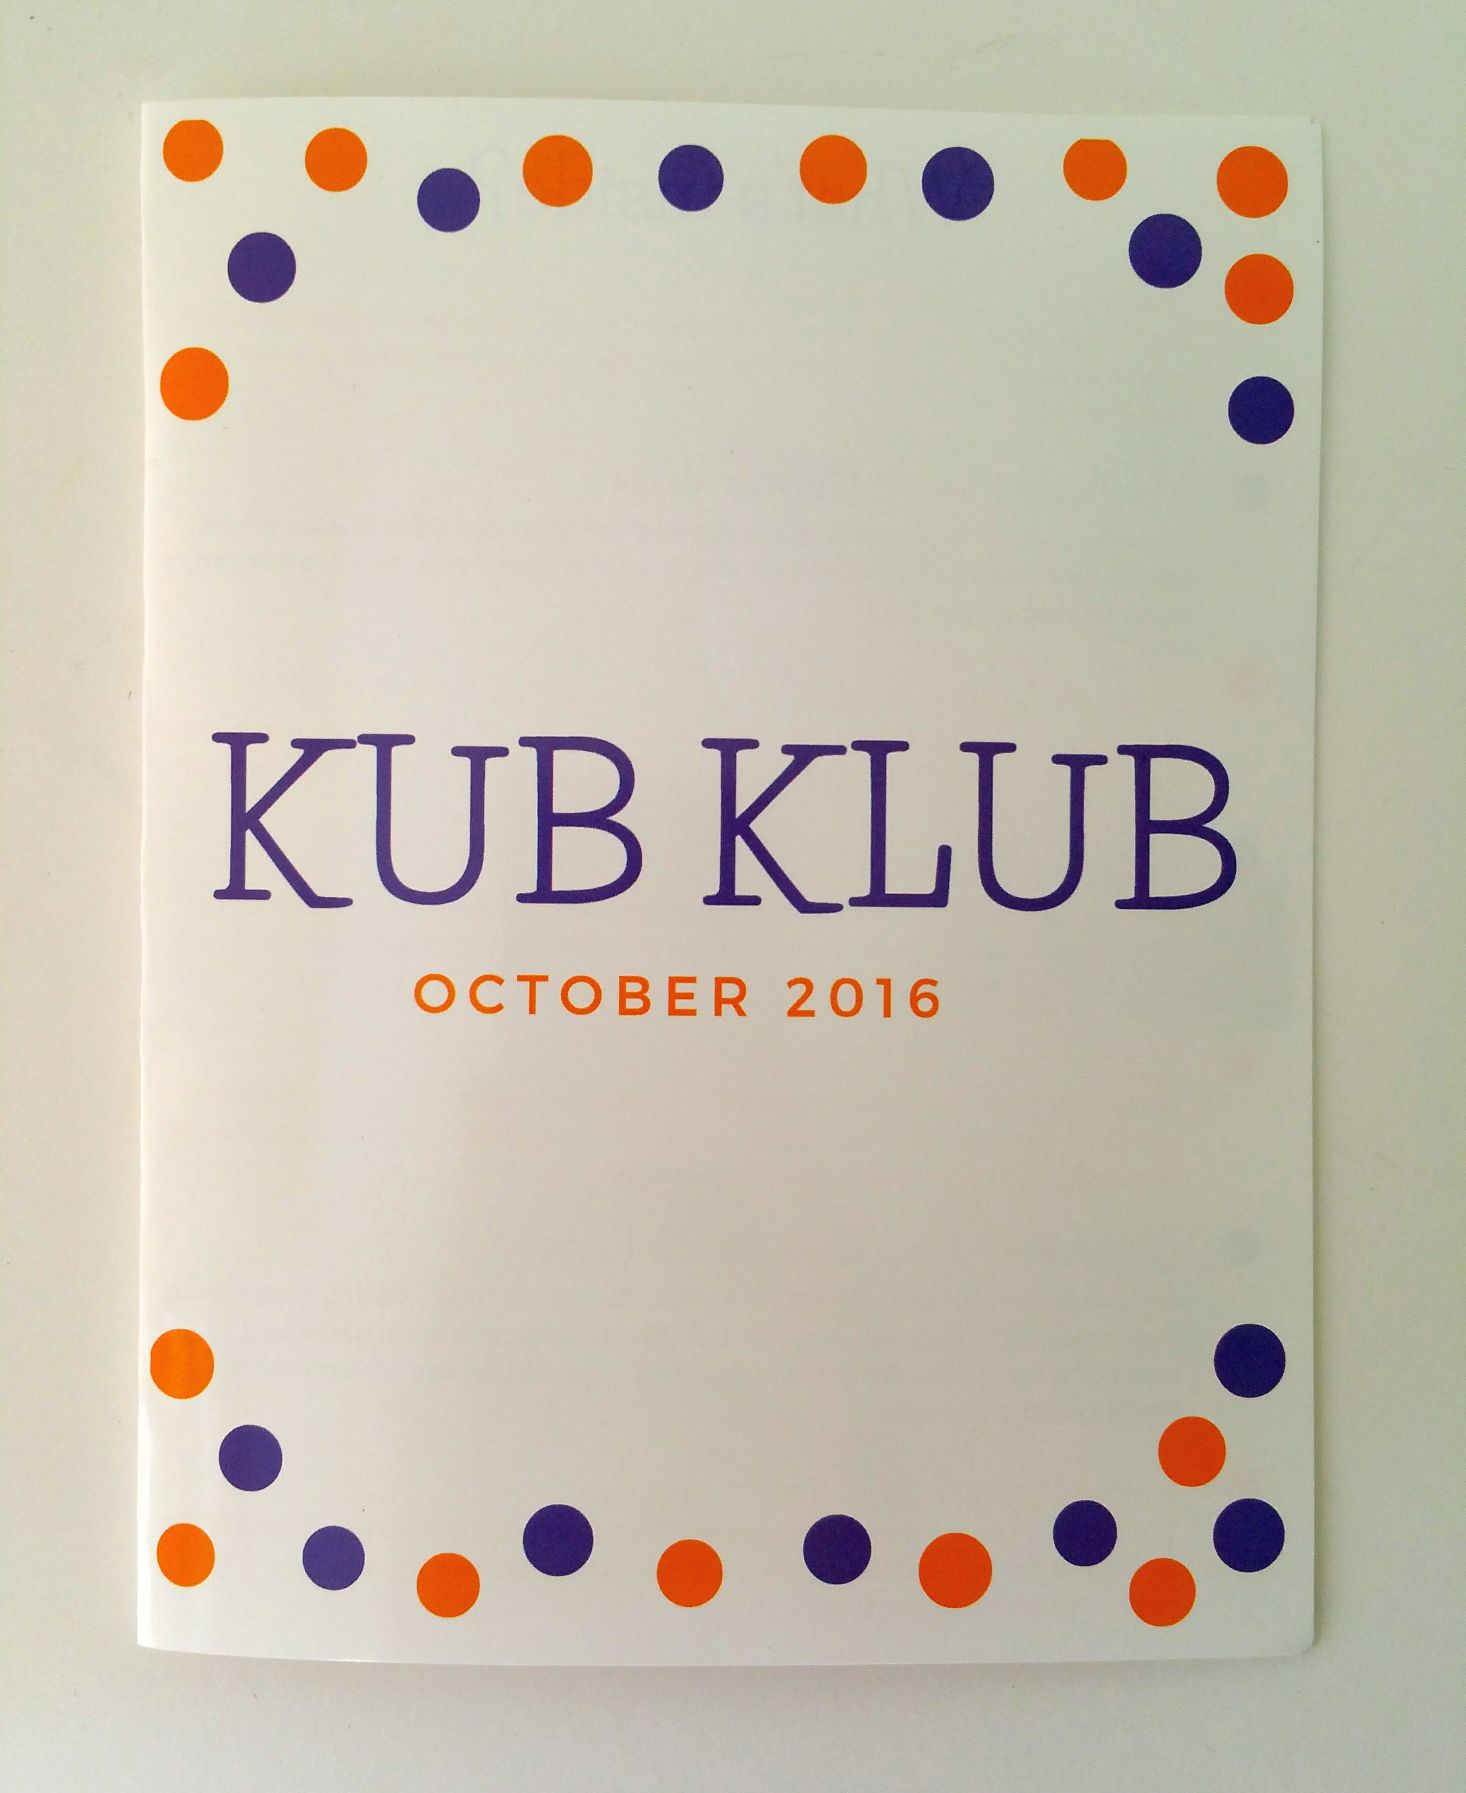 kub-klub-october-2016-info-card